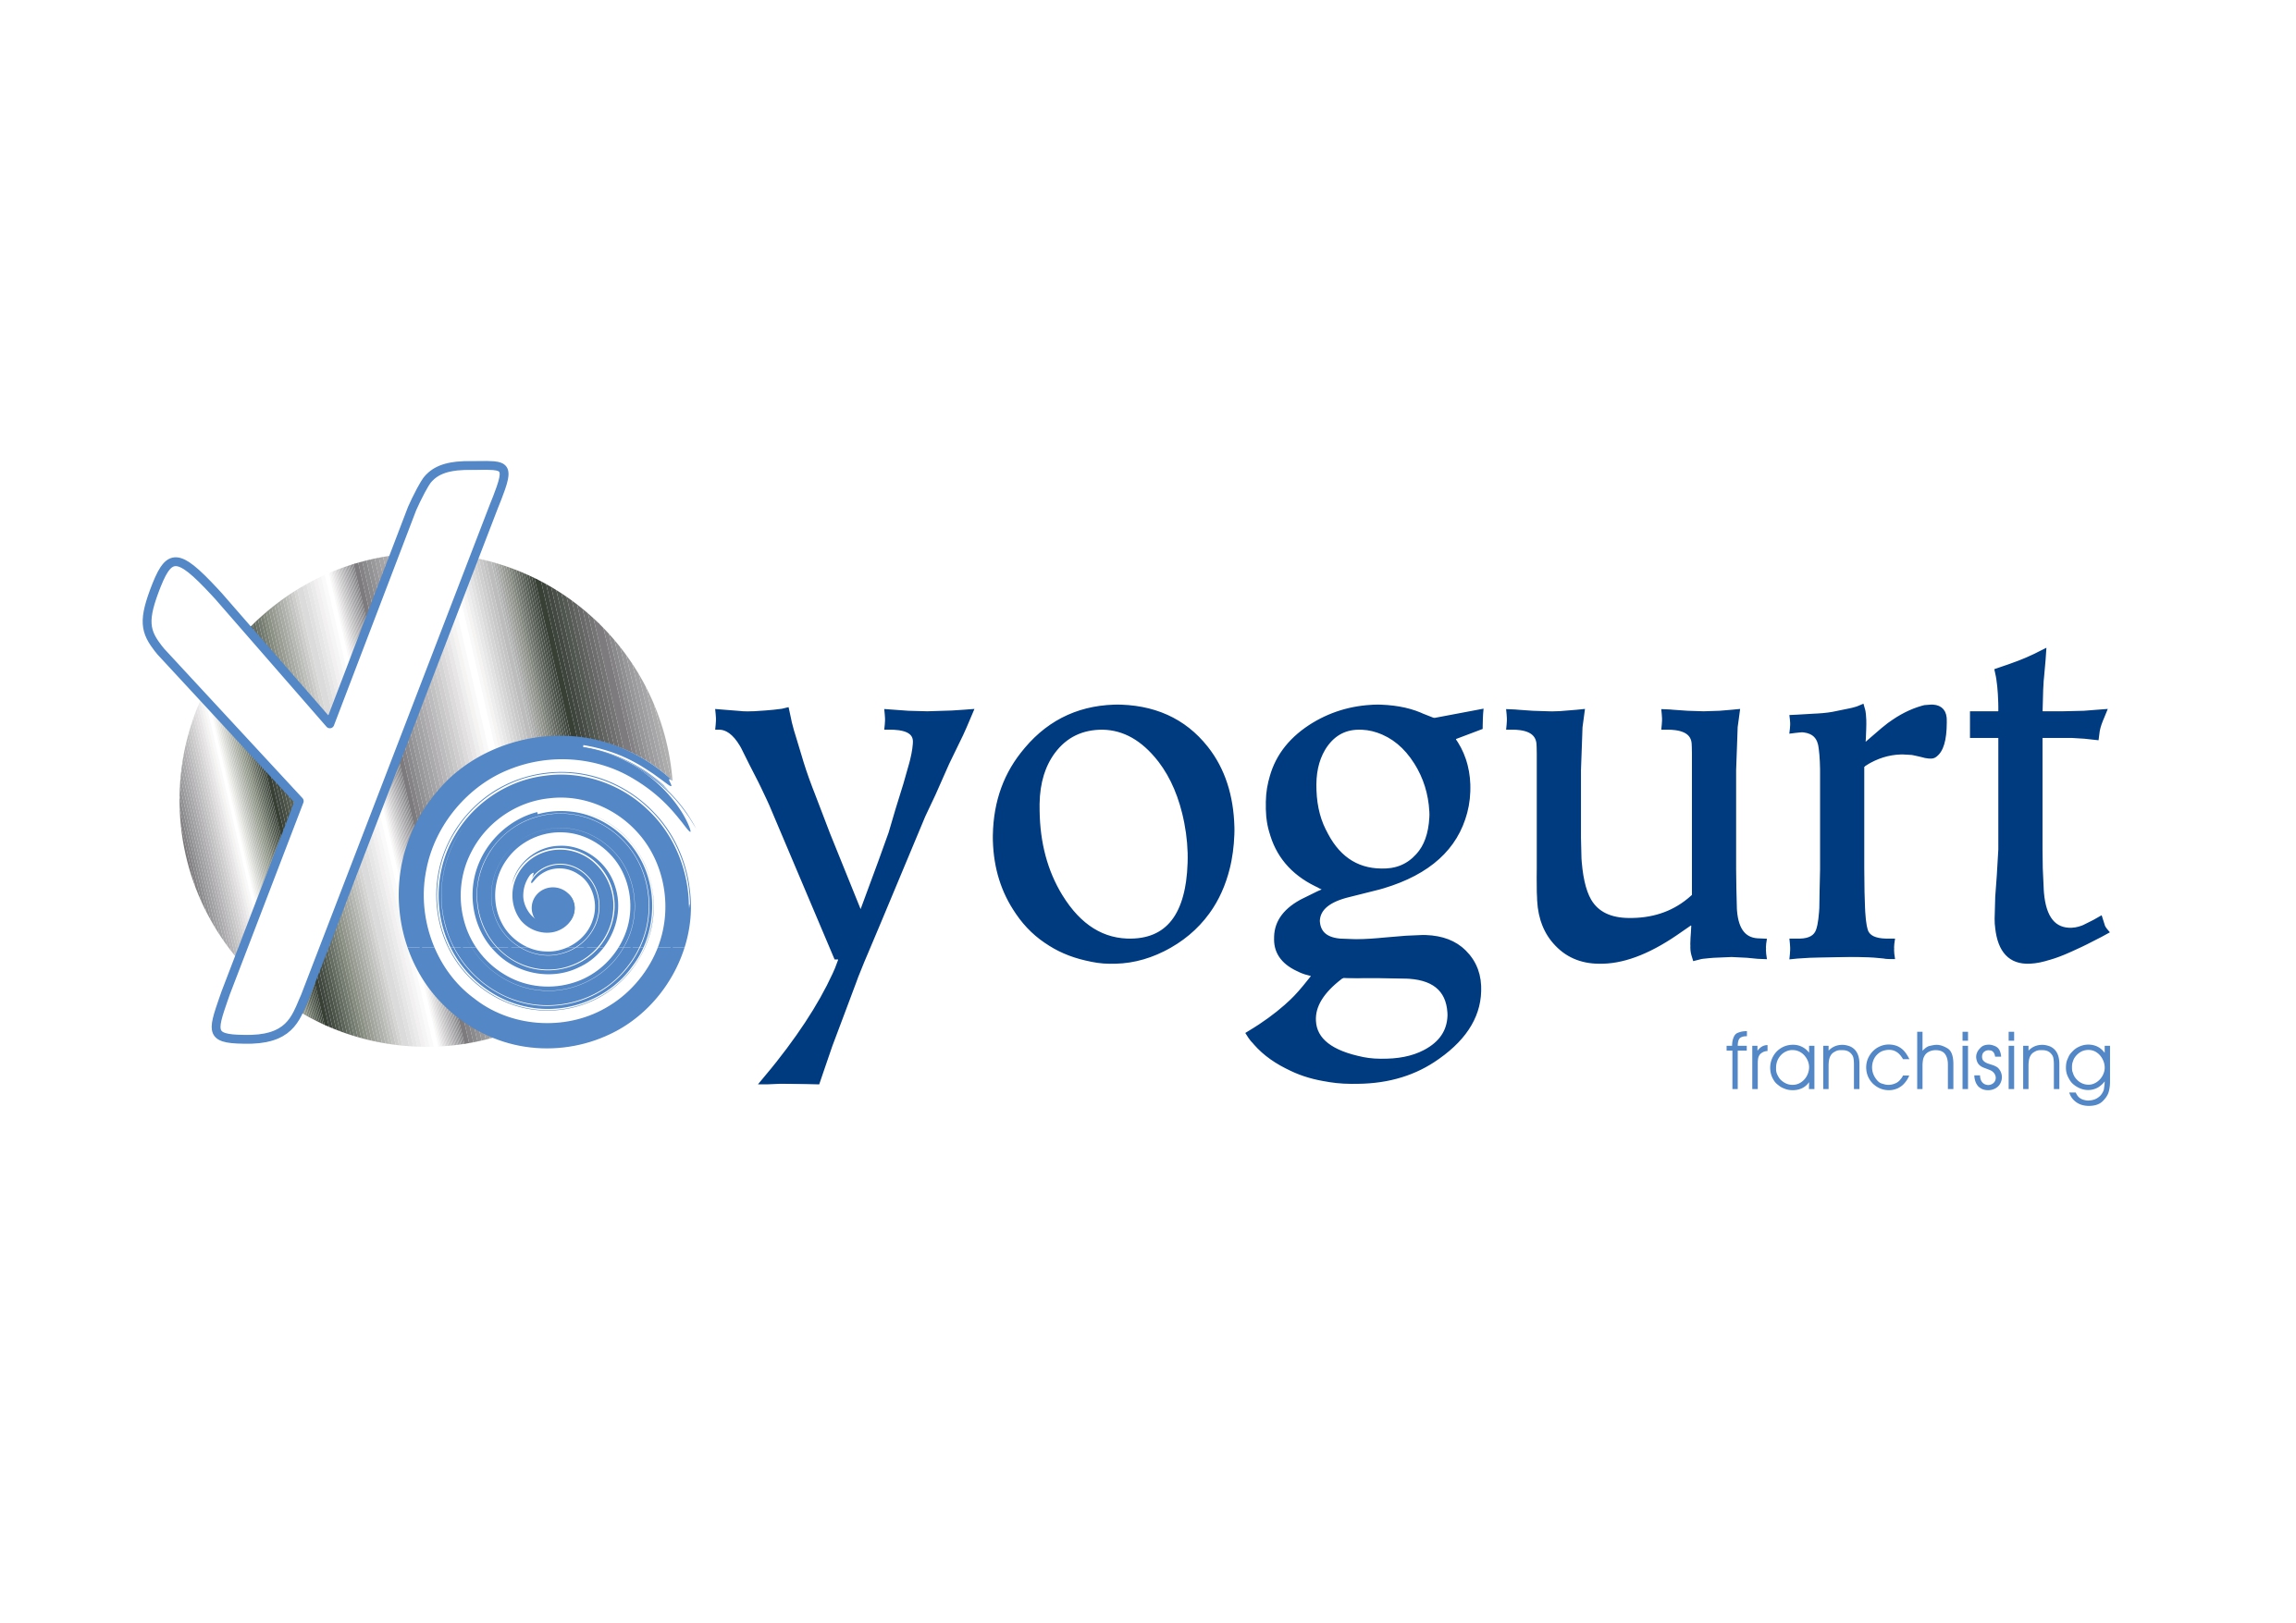 YoYogurt